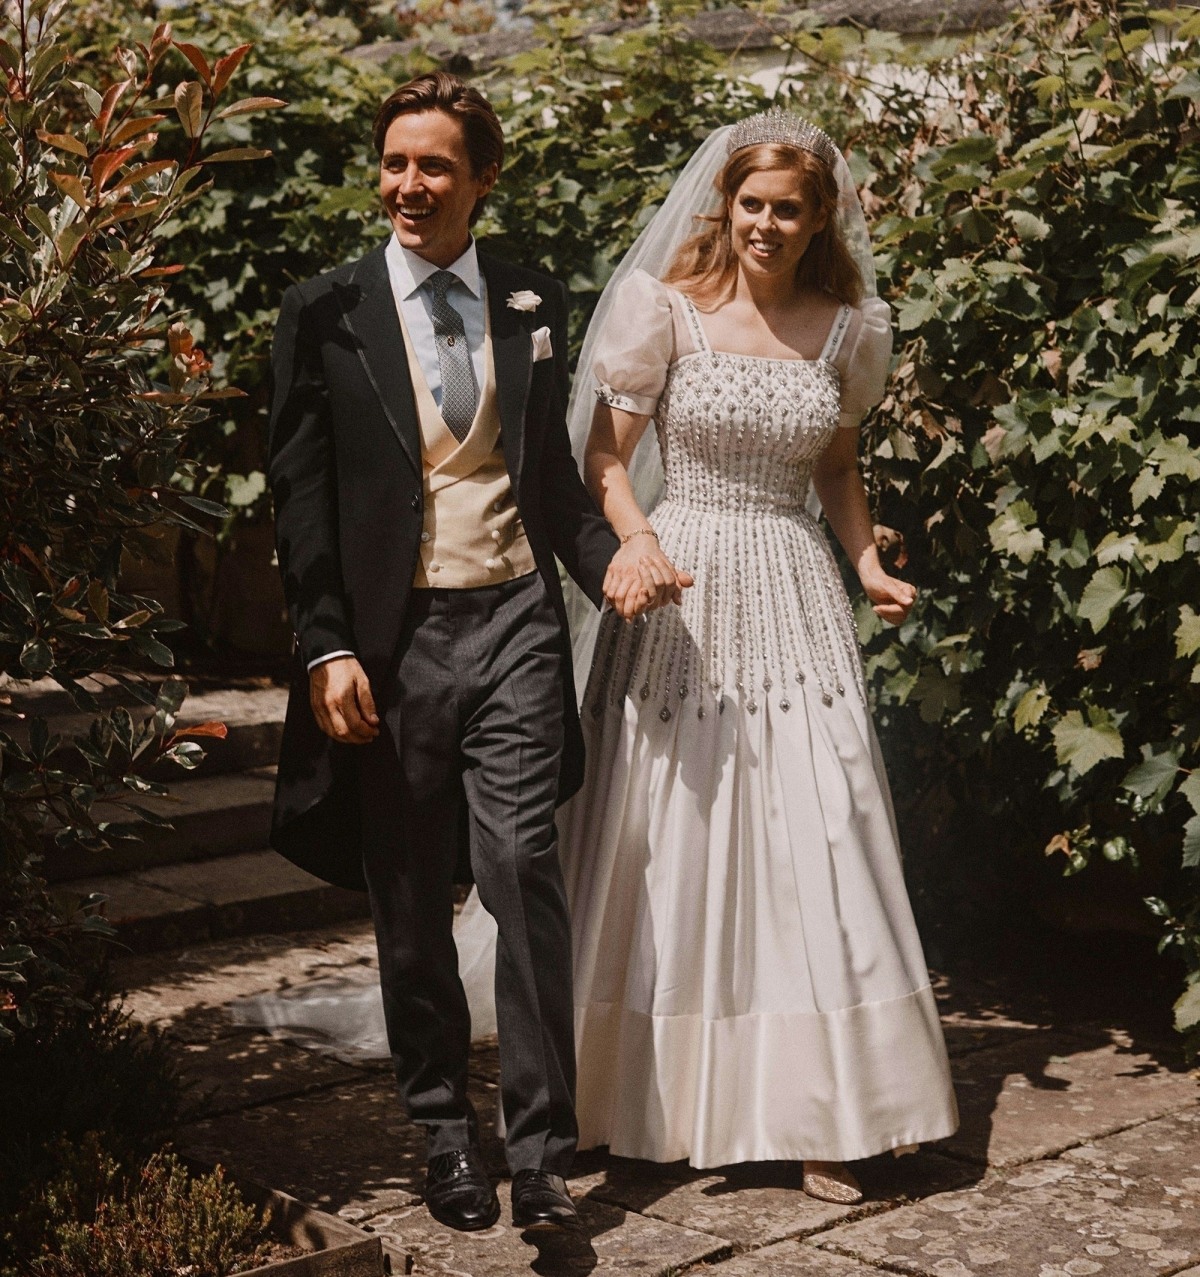 Official Wedding Photos of Princess Beatrice and Edoardo Mapelli Mozzi